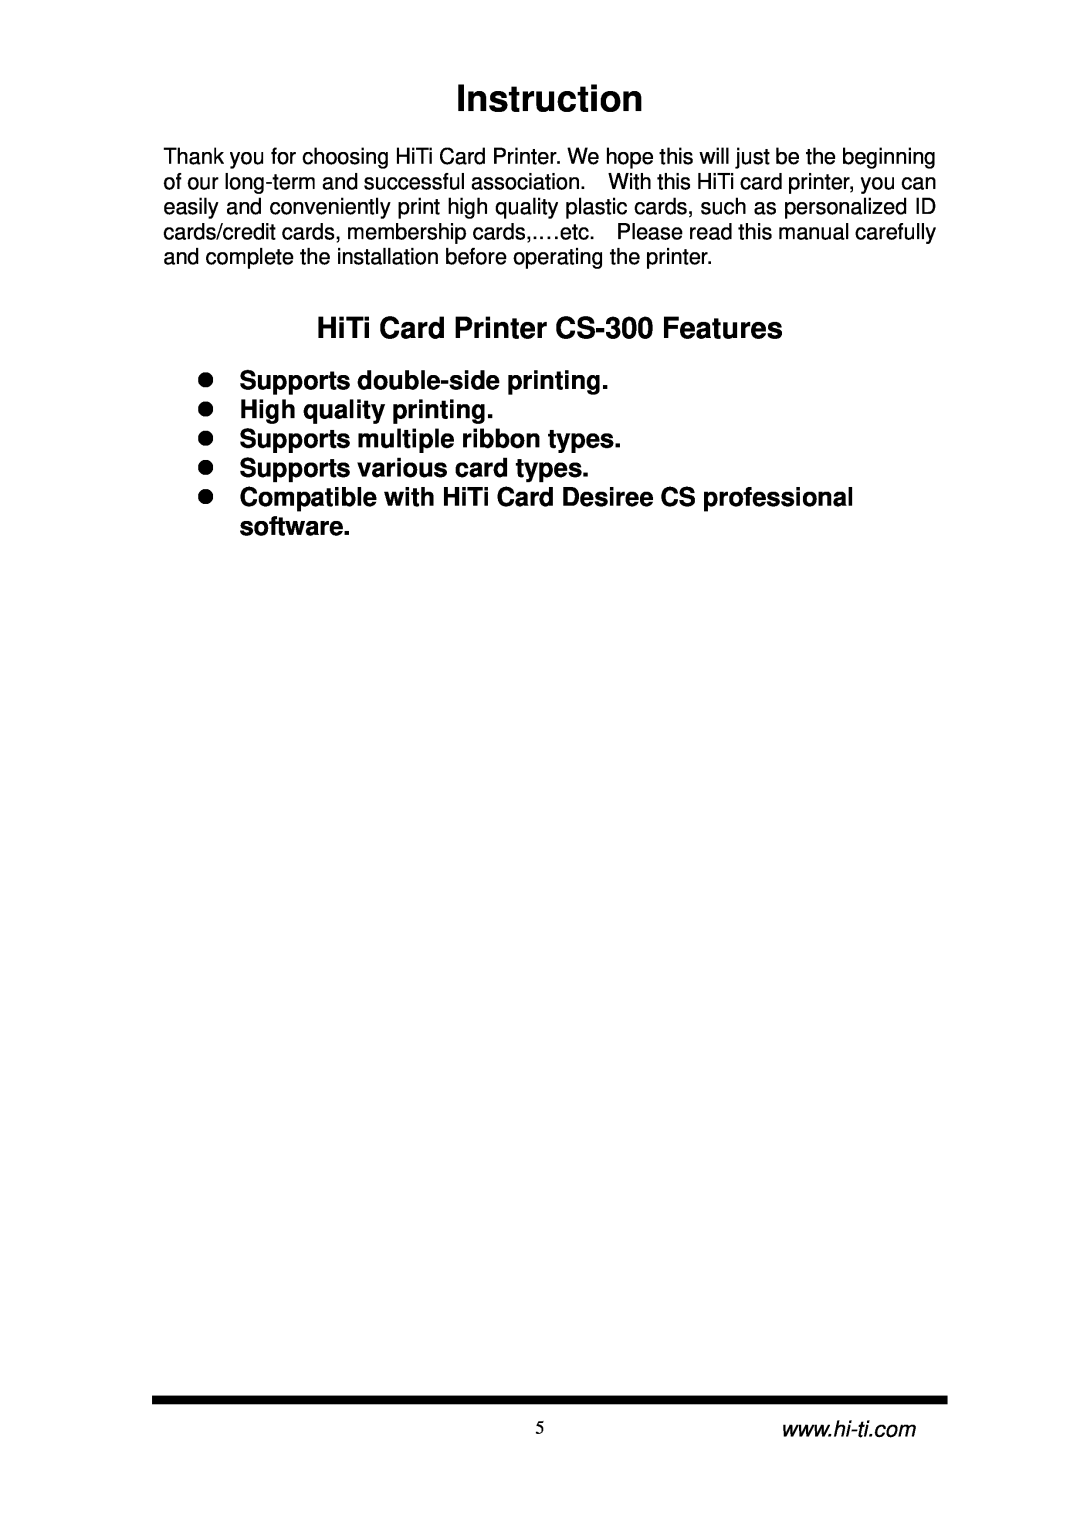 Hi-Touch Imaging Technologies user manual Instruction, HiTi Card Printer CS-300 Features 